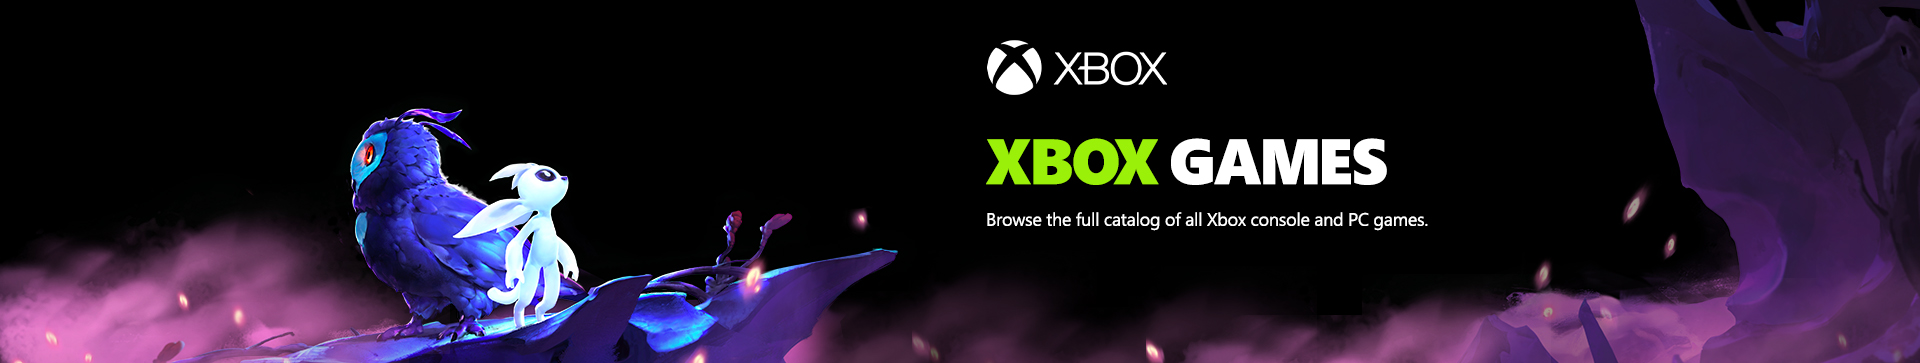 Microsoft Xbox Games Refresh 01.31.banner2 Catalog